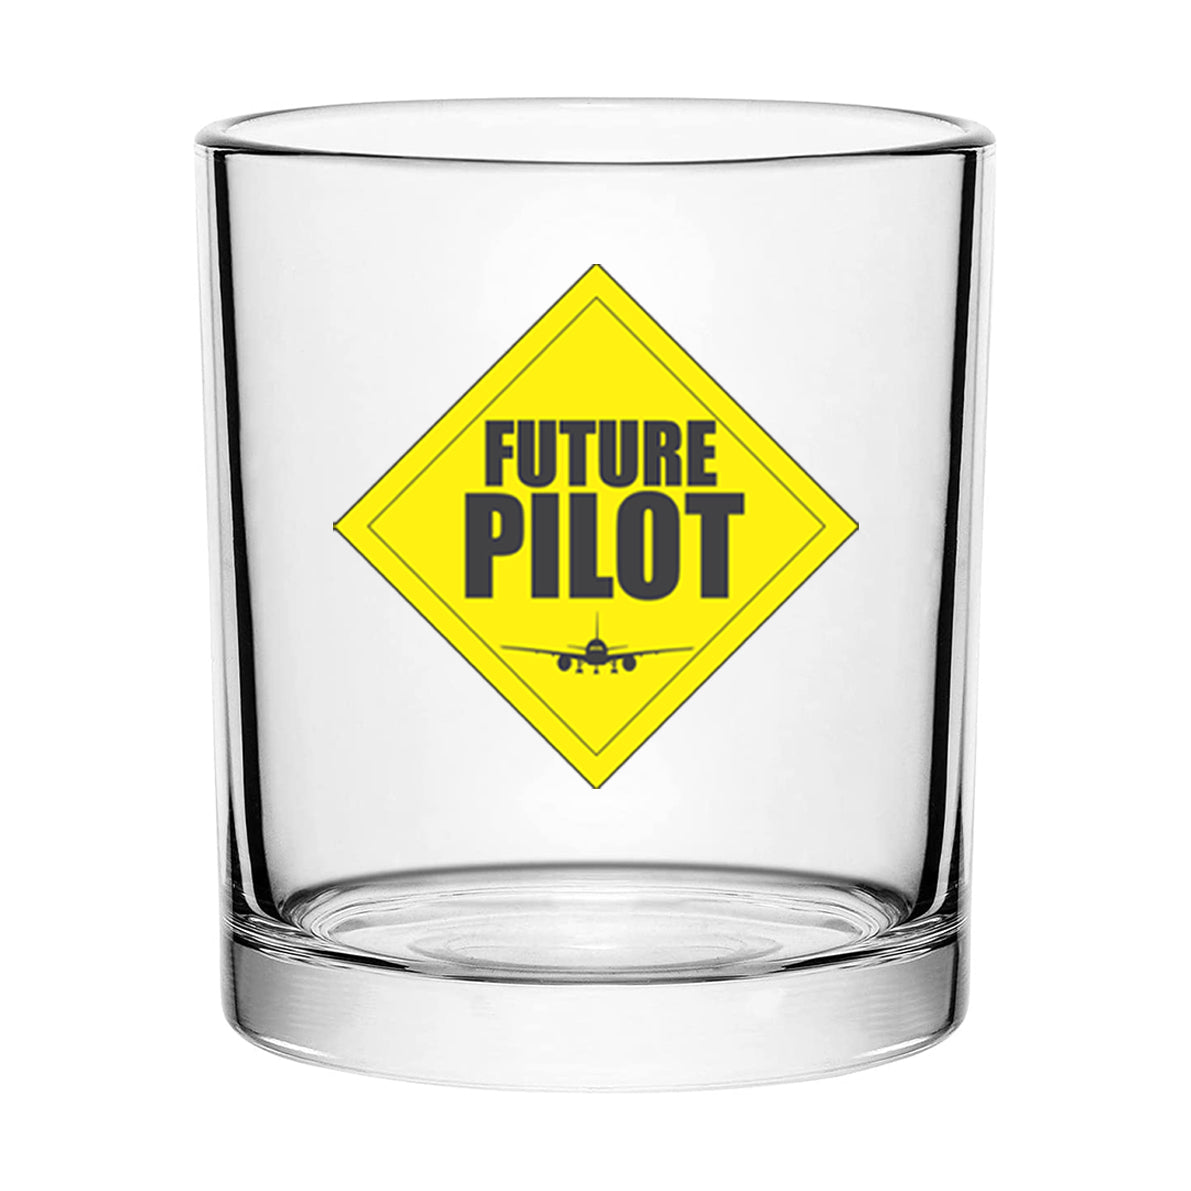 Future Pilot Designed Special Whiskey Glasses